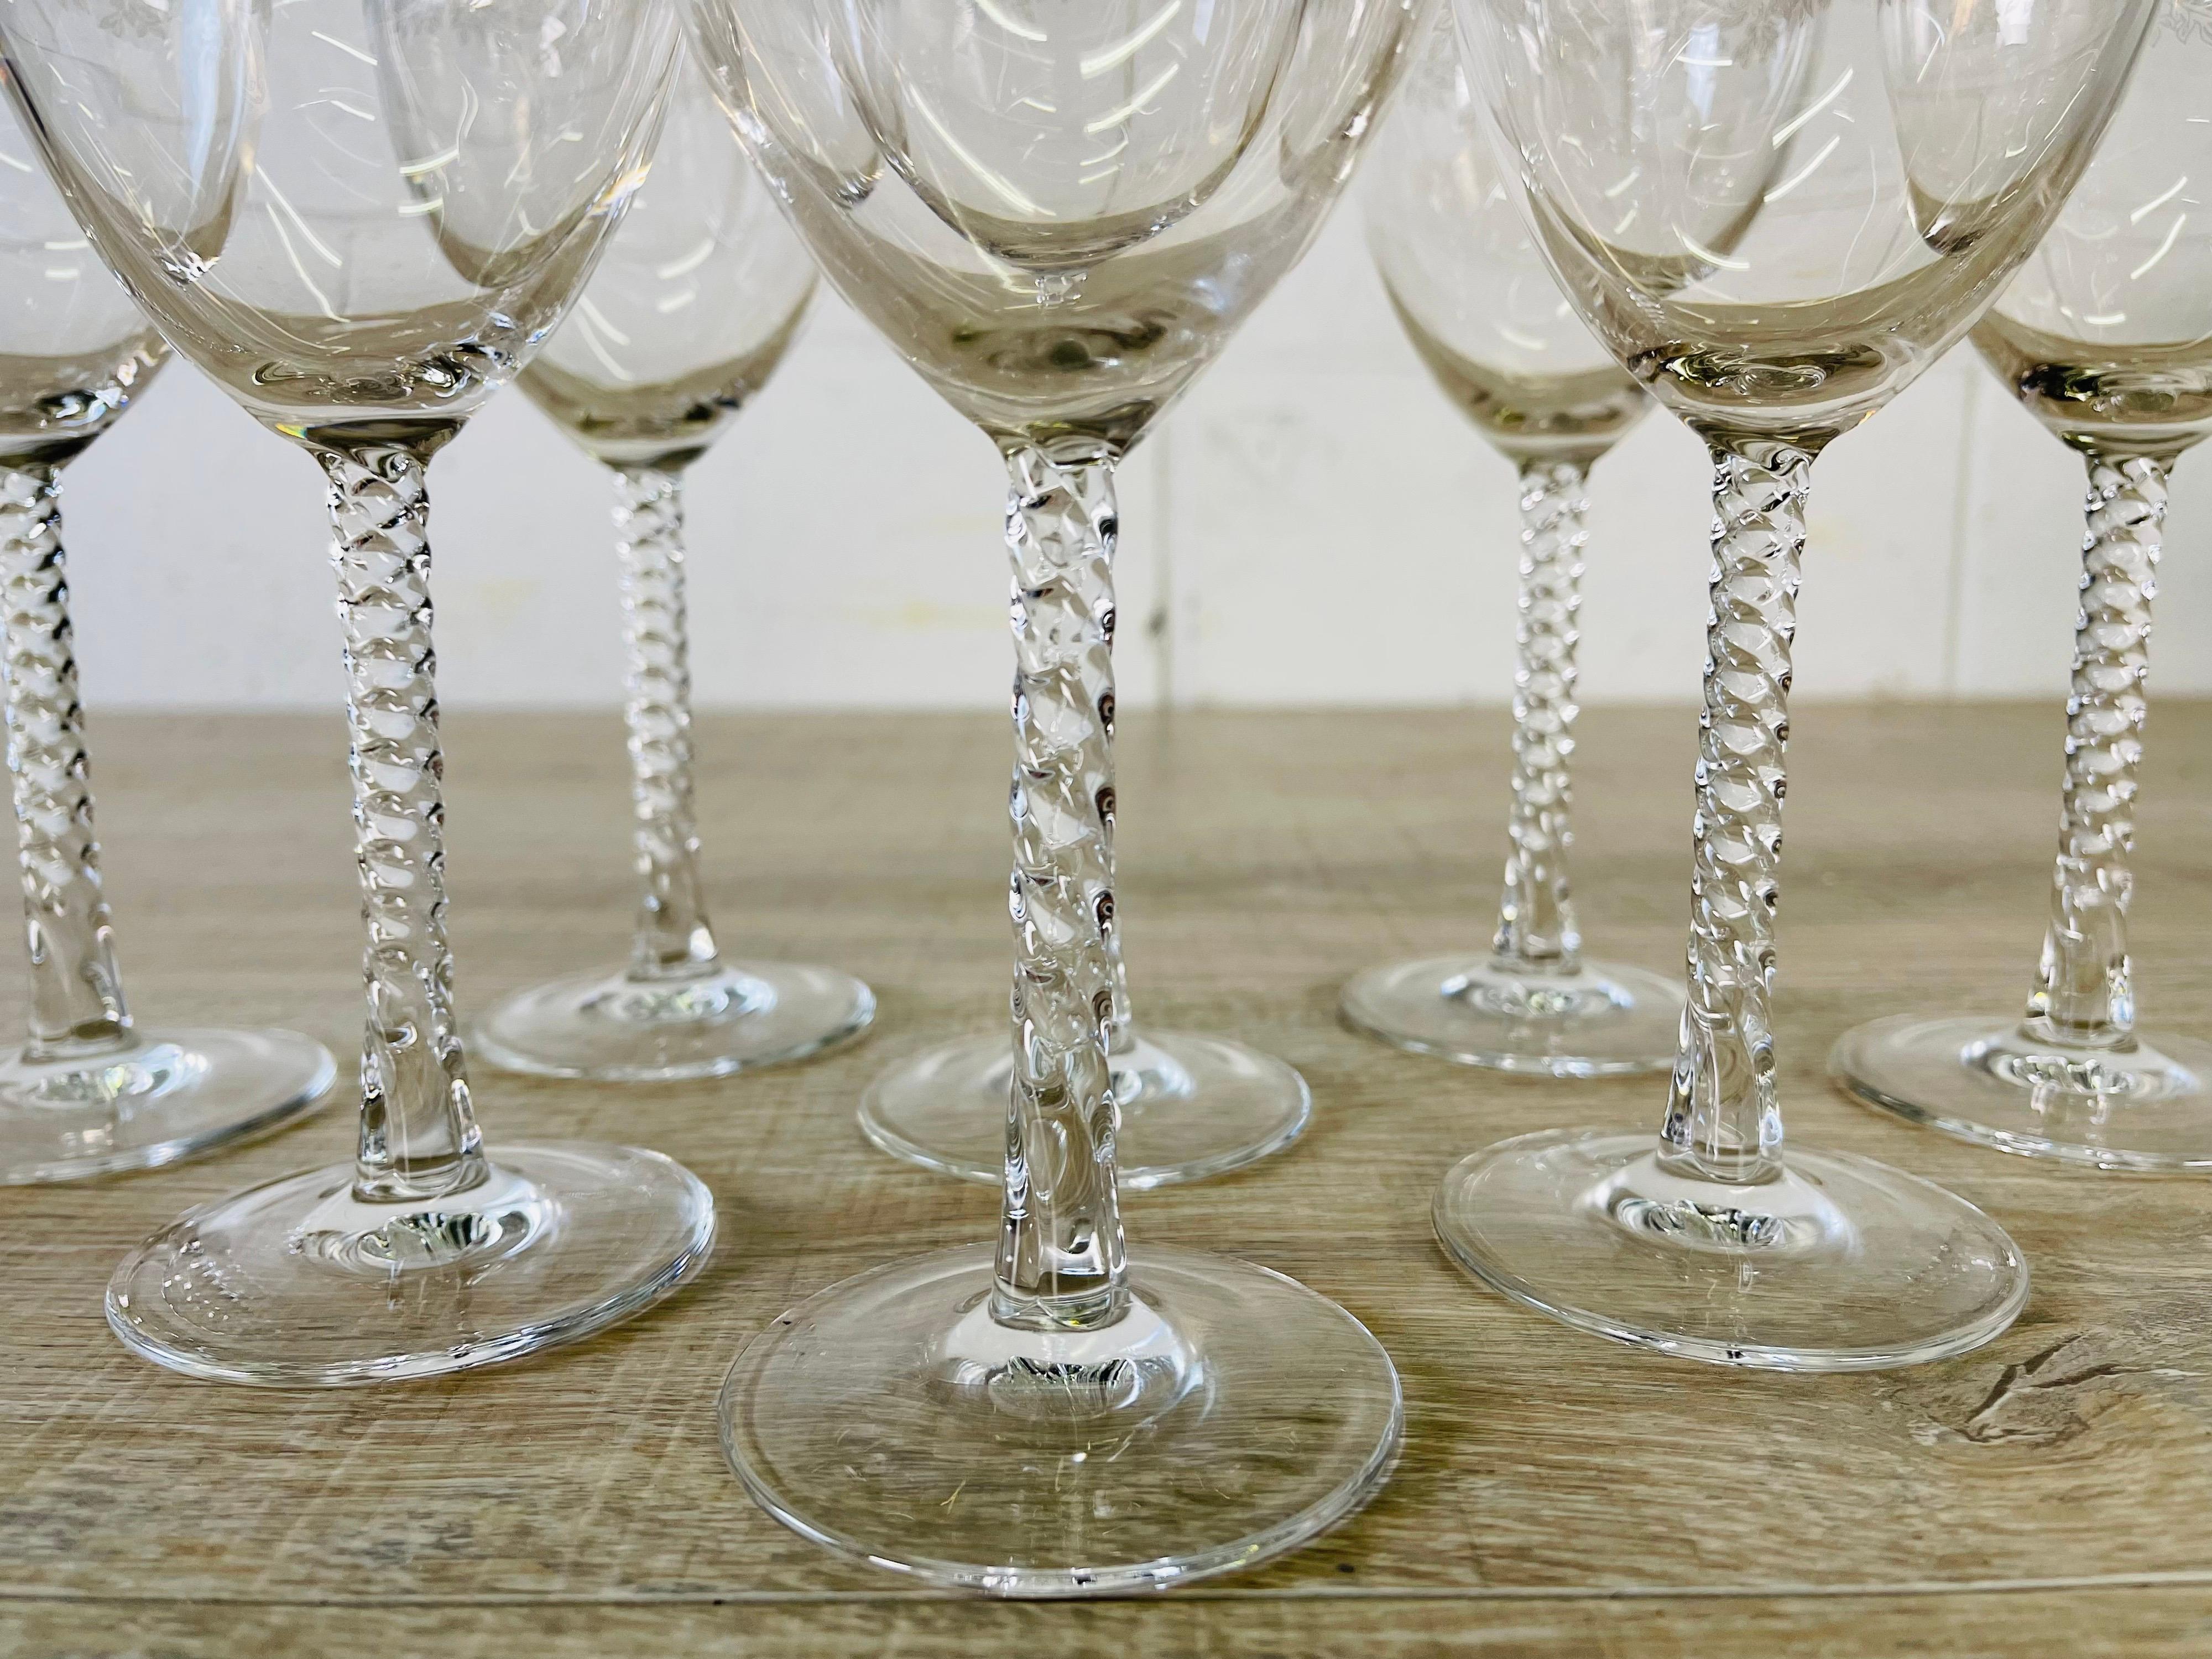 vintage wine glasses with gold rim